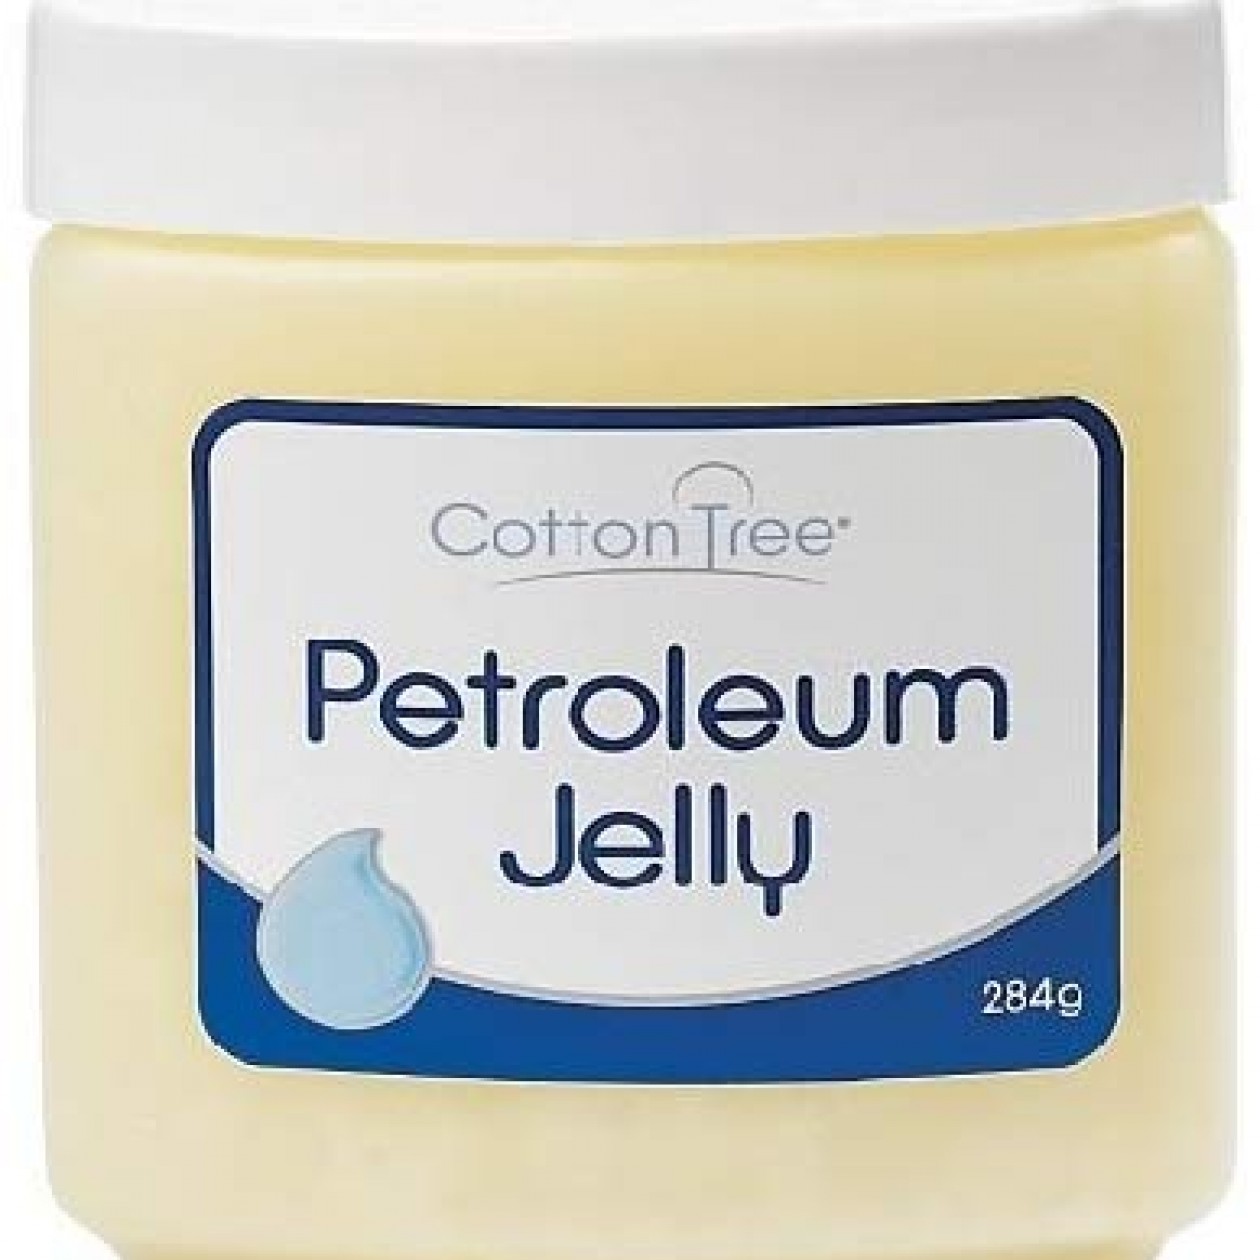 Cotton Tree Petroleum Jelly 284g